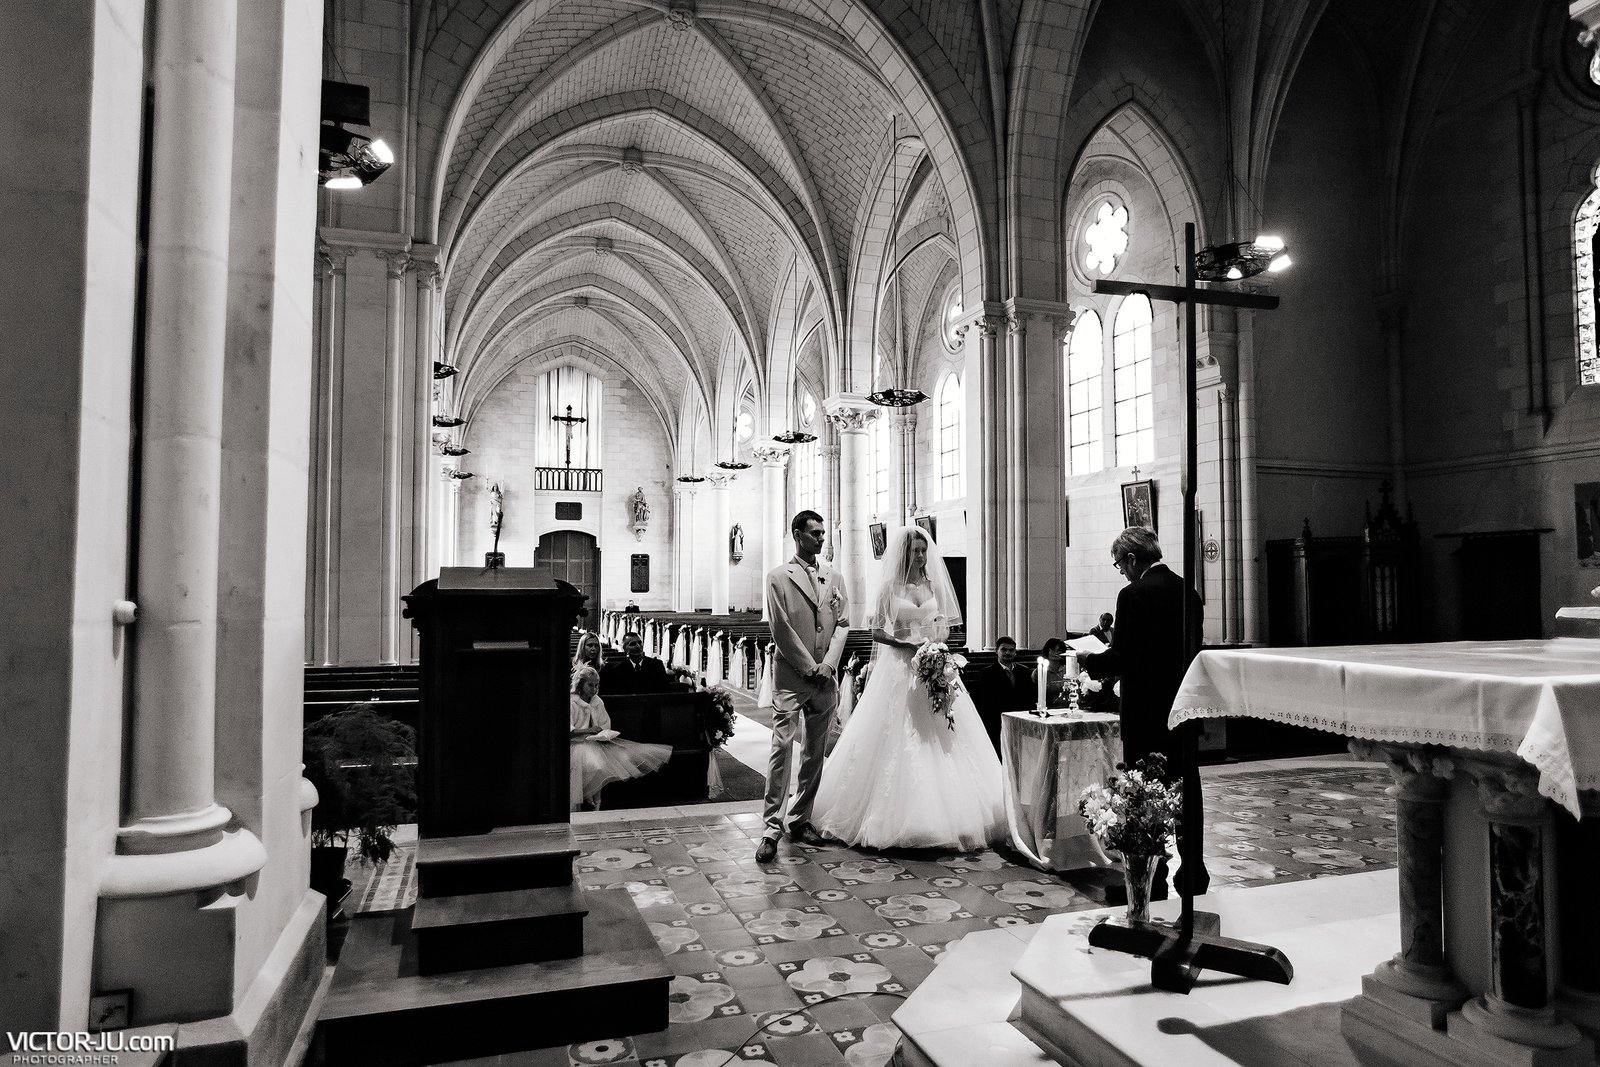 Wedding ceremony in France